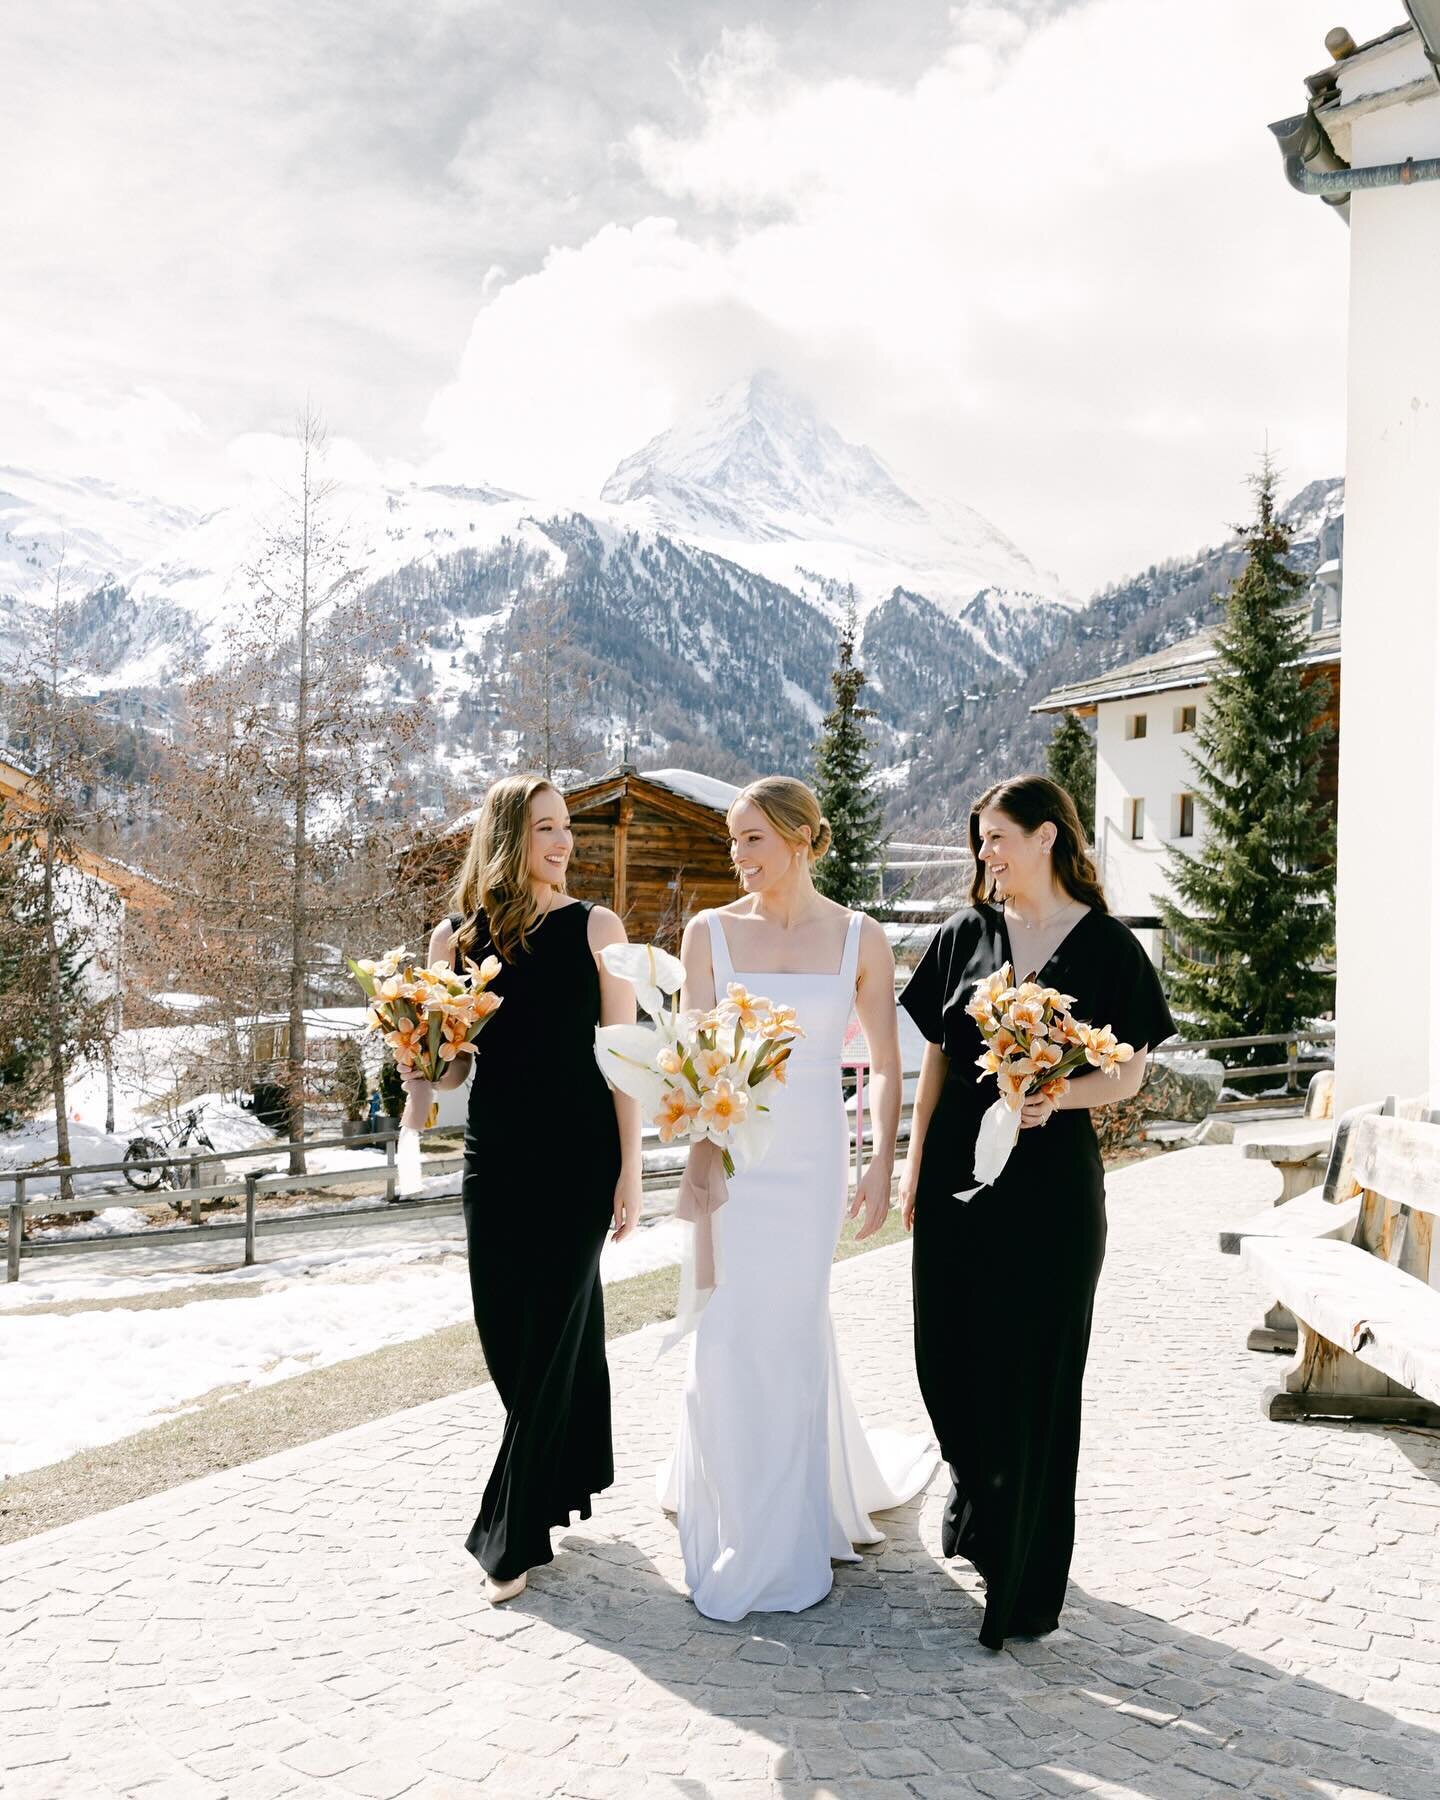 a dreamy wedding in Switzerland 🤍 #akgigi